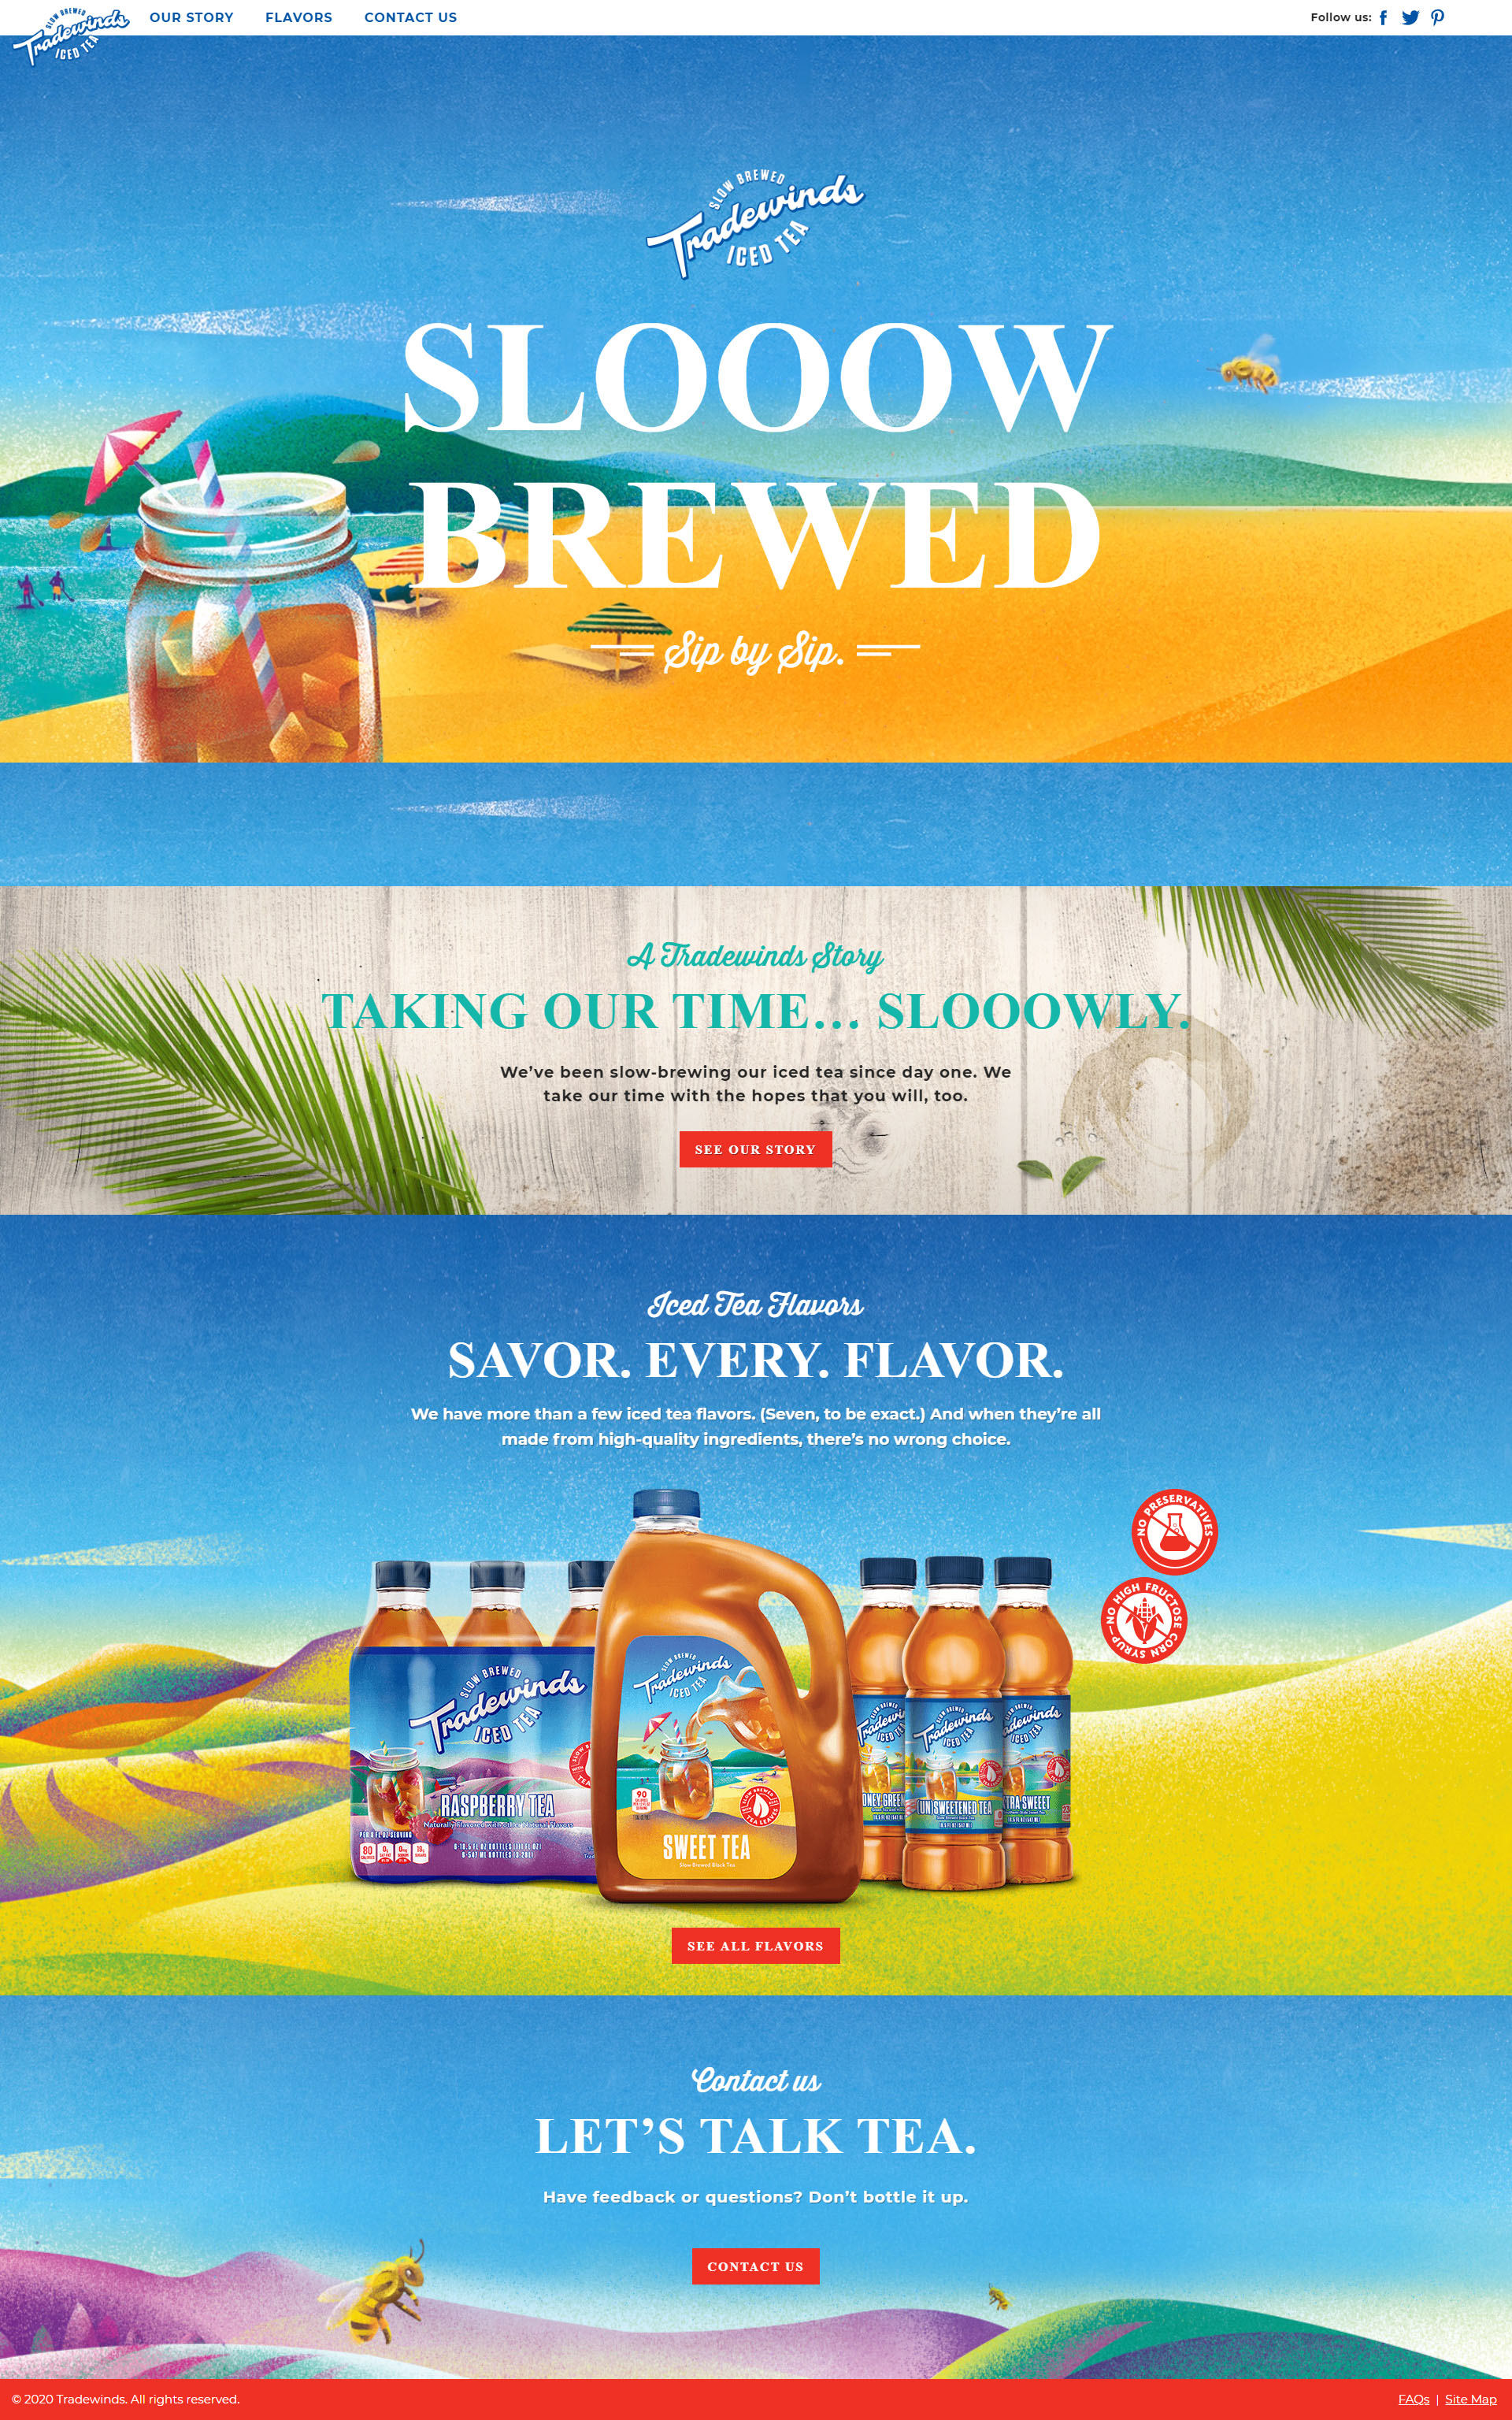 Previous Beverage Website Design Example